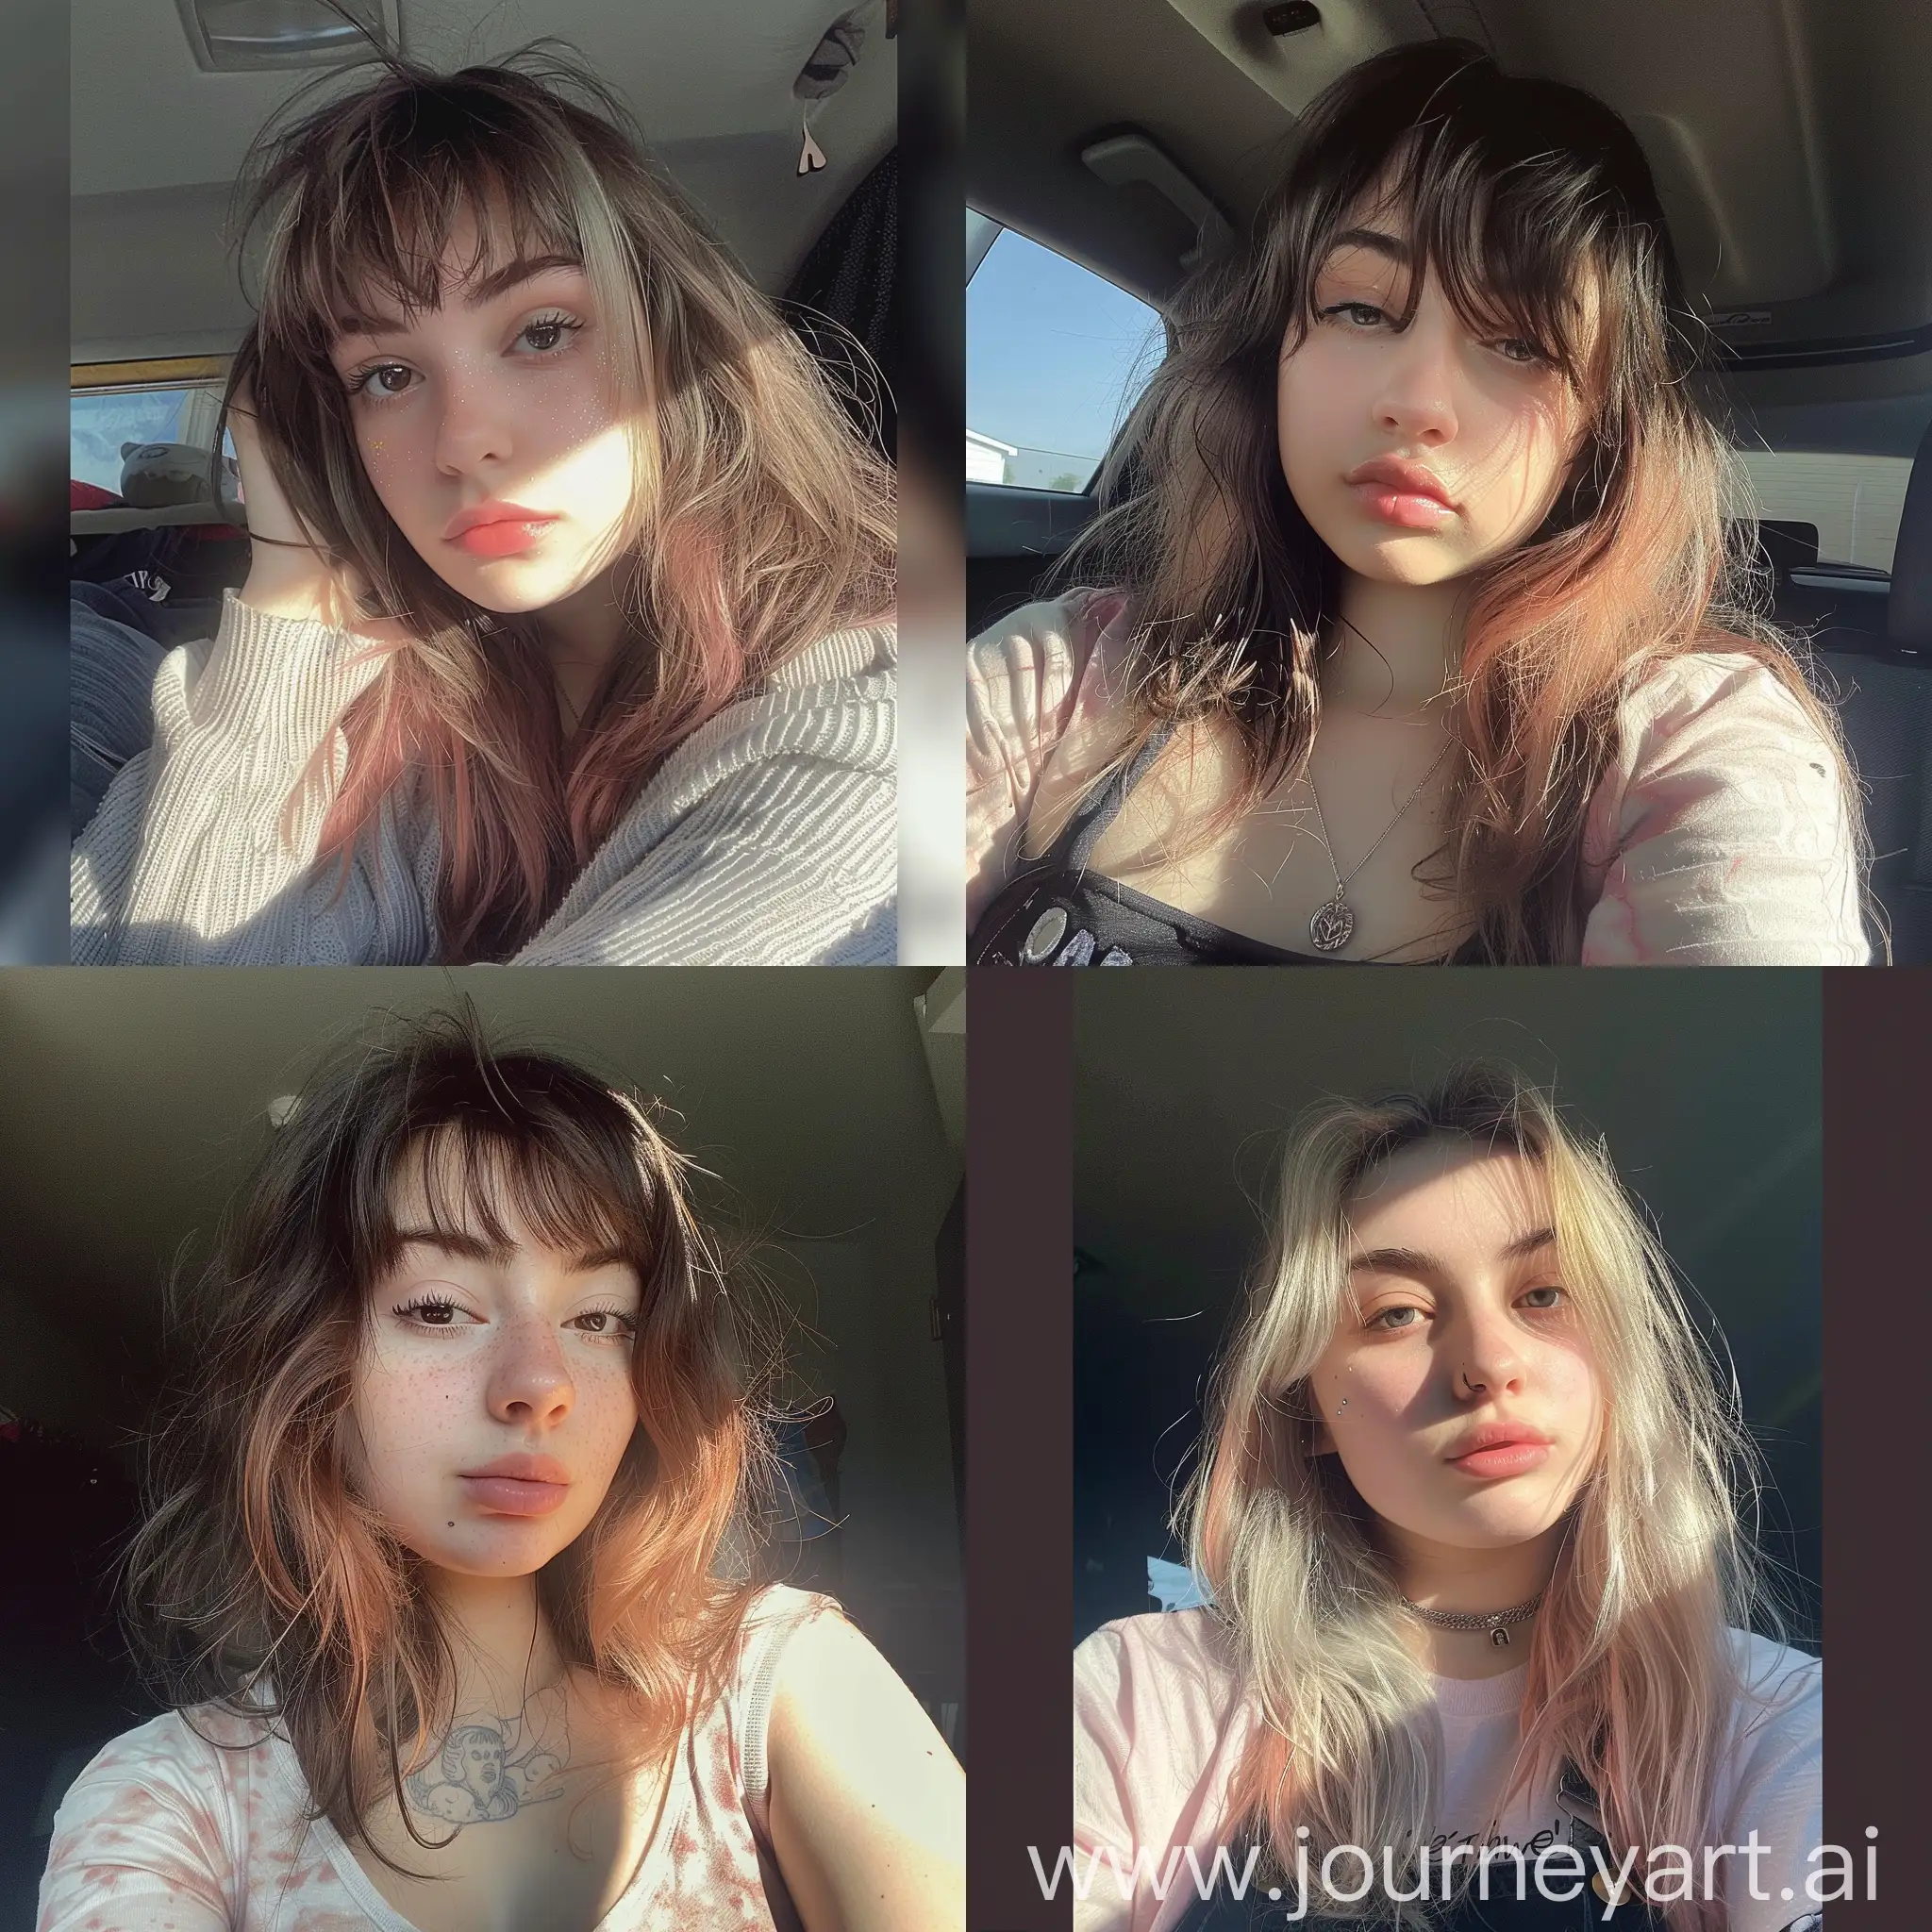 Aesthetic Instagram selfie of a girl